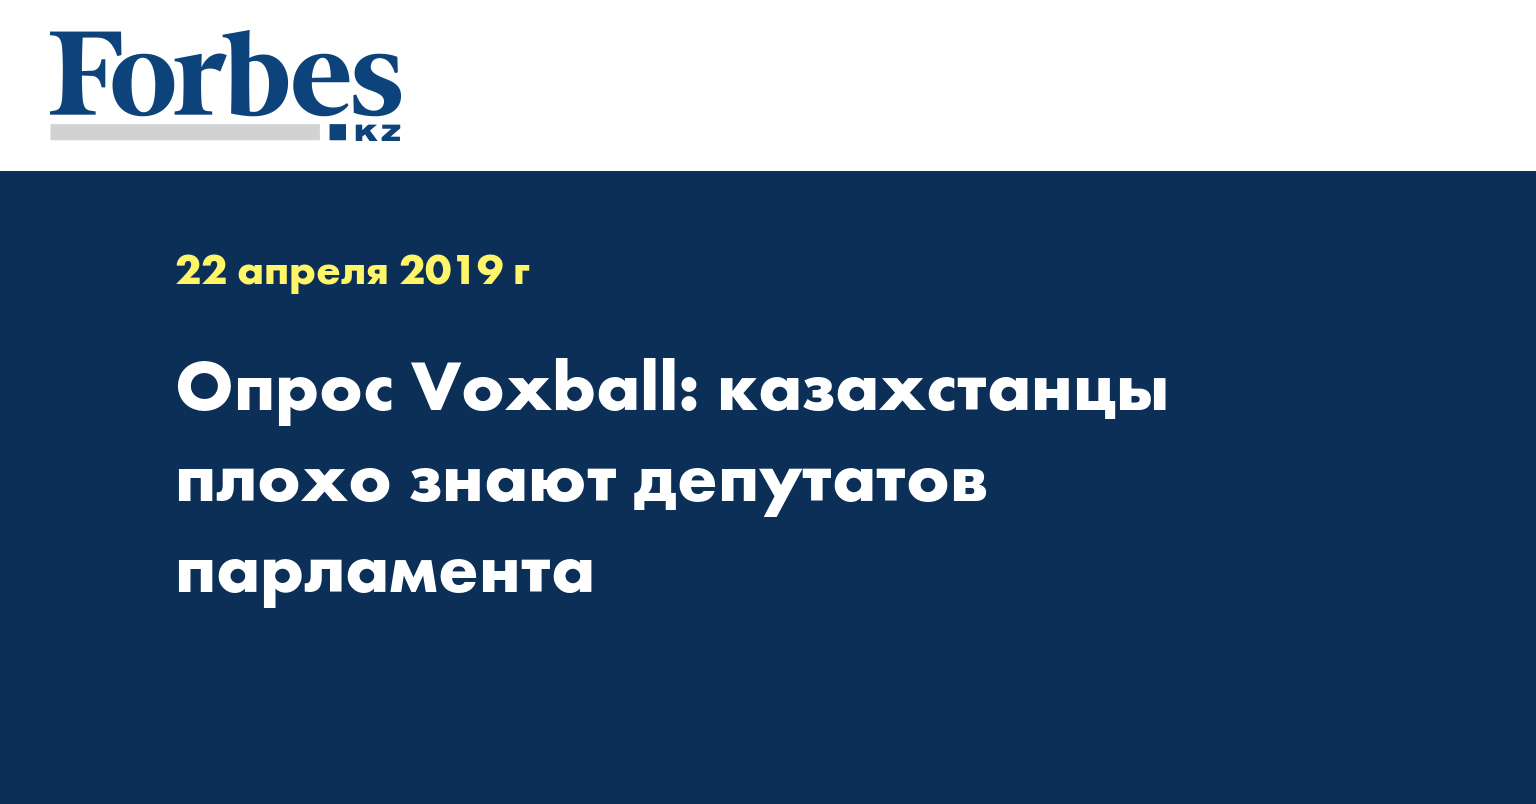 Опрос Voxball: казахстанцы плохо знают депутатов парламента